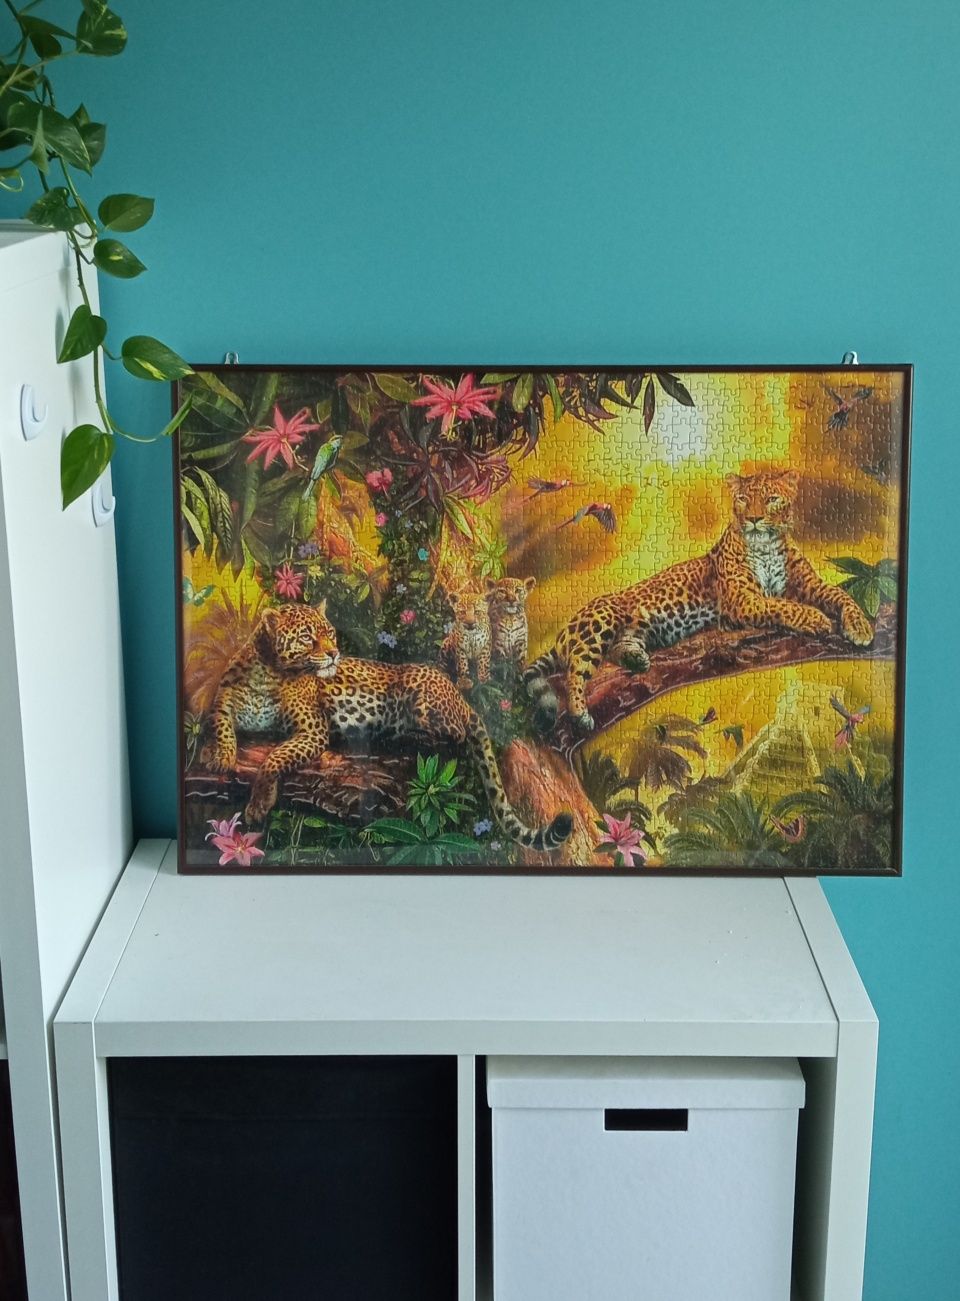 56x80cm Obraz z puzzli natura, przyroda pantera / lampart